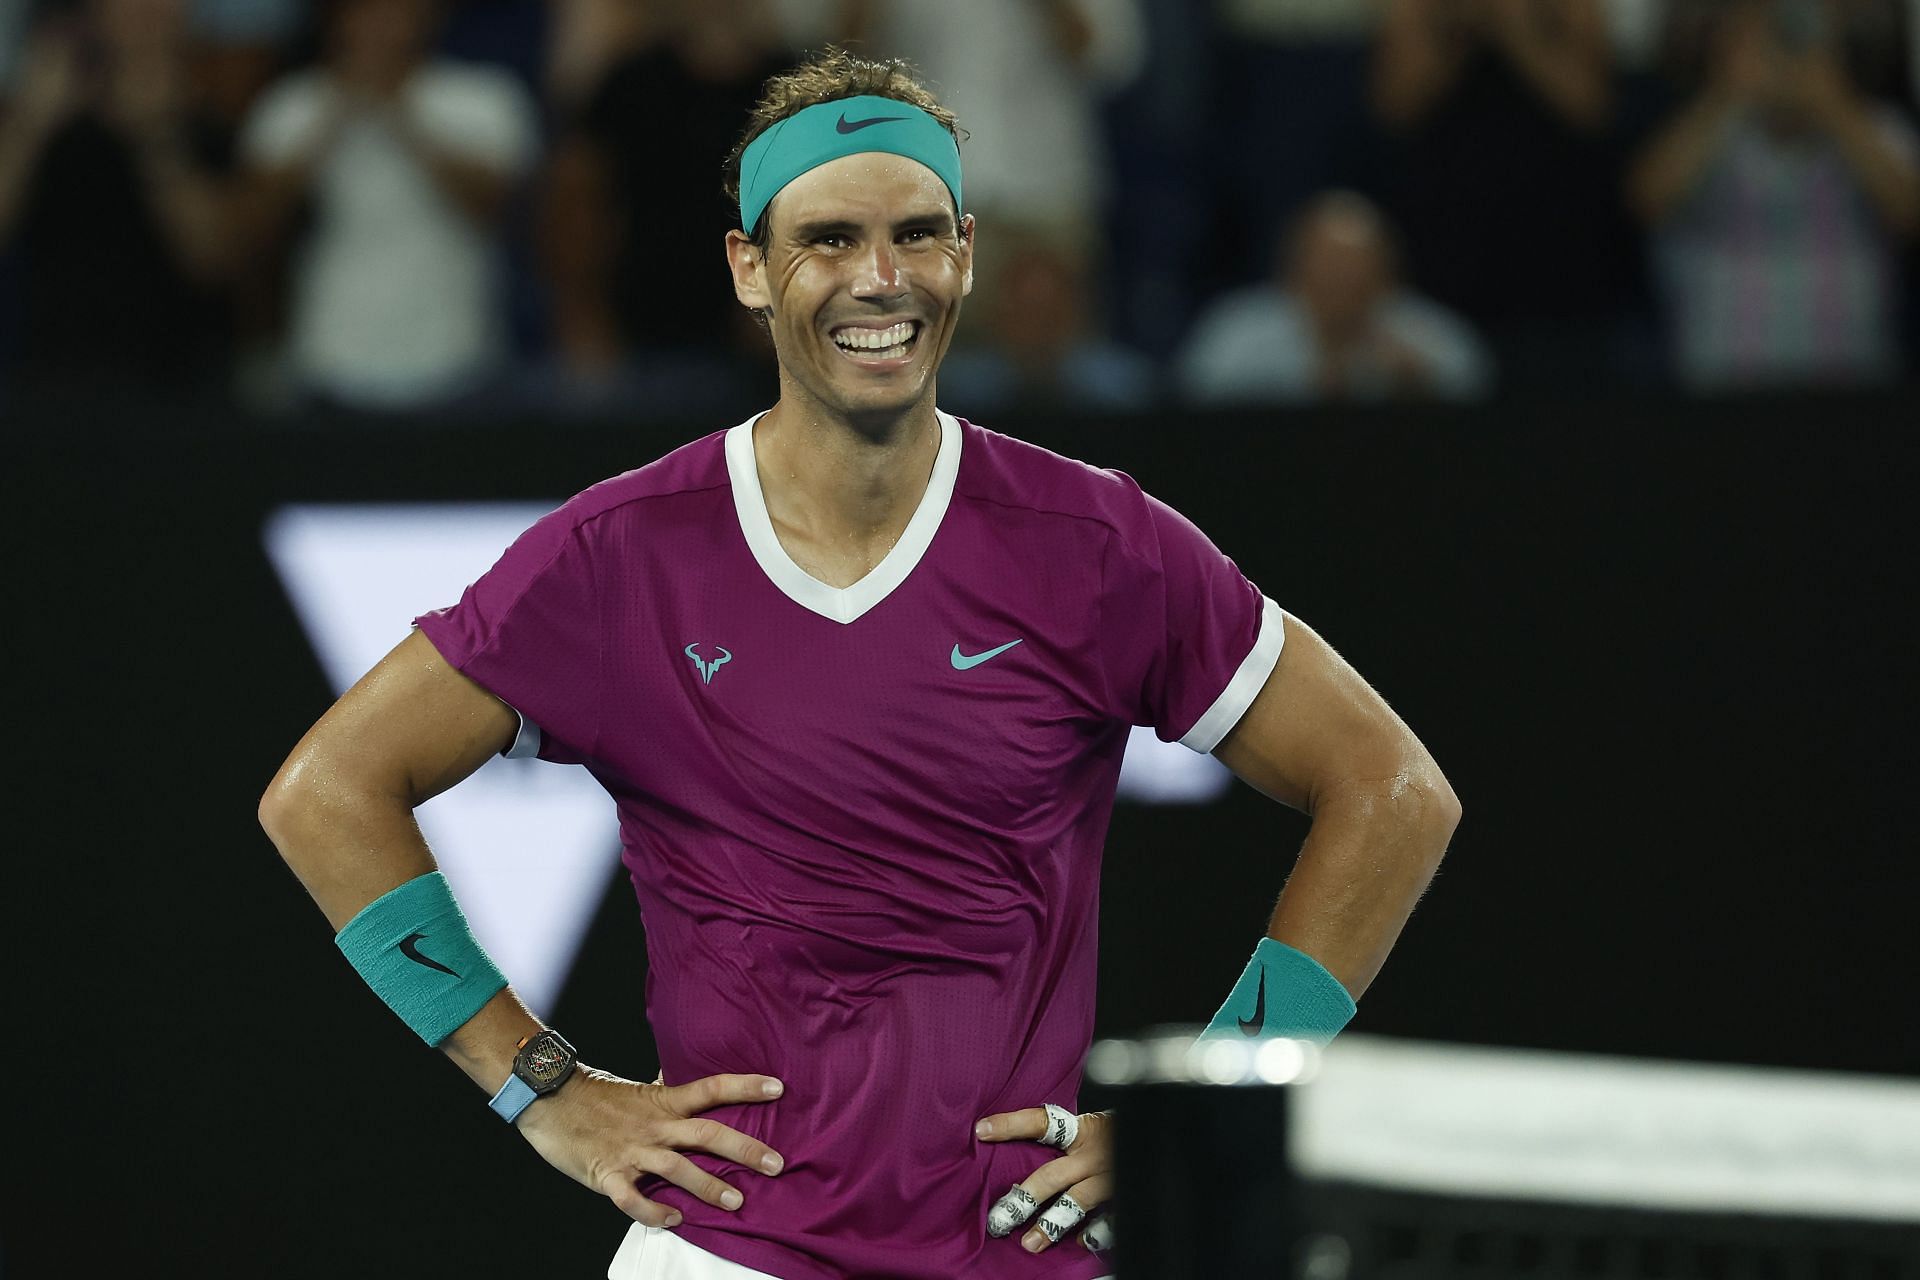 Rafael Nadal after winning the Australian Open.